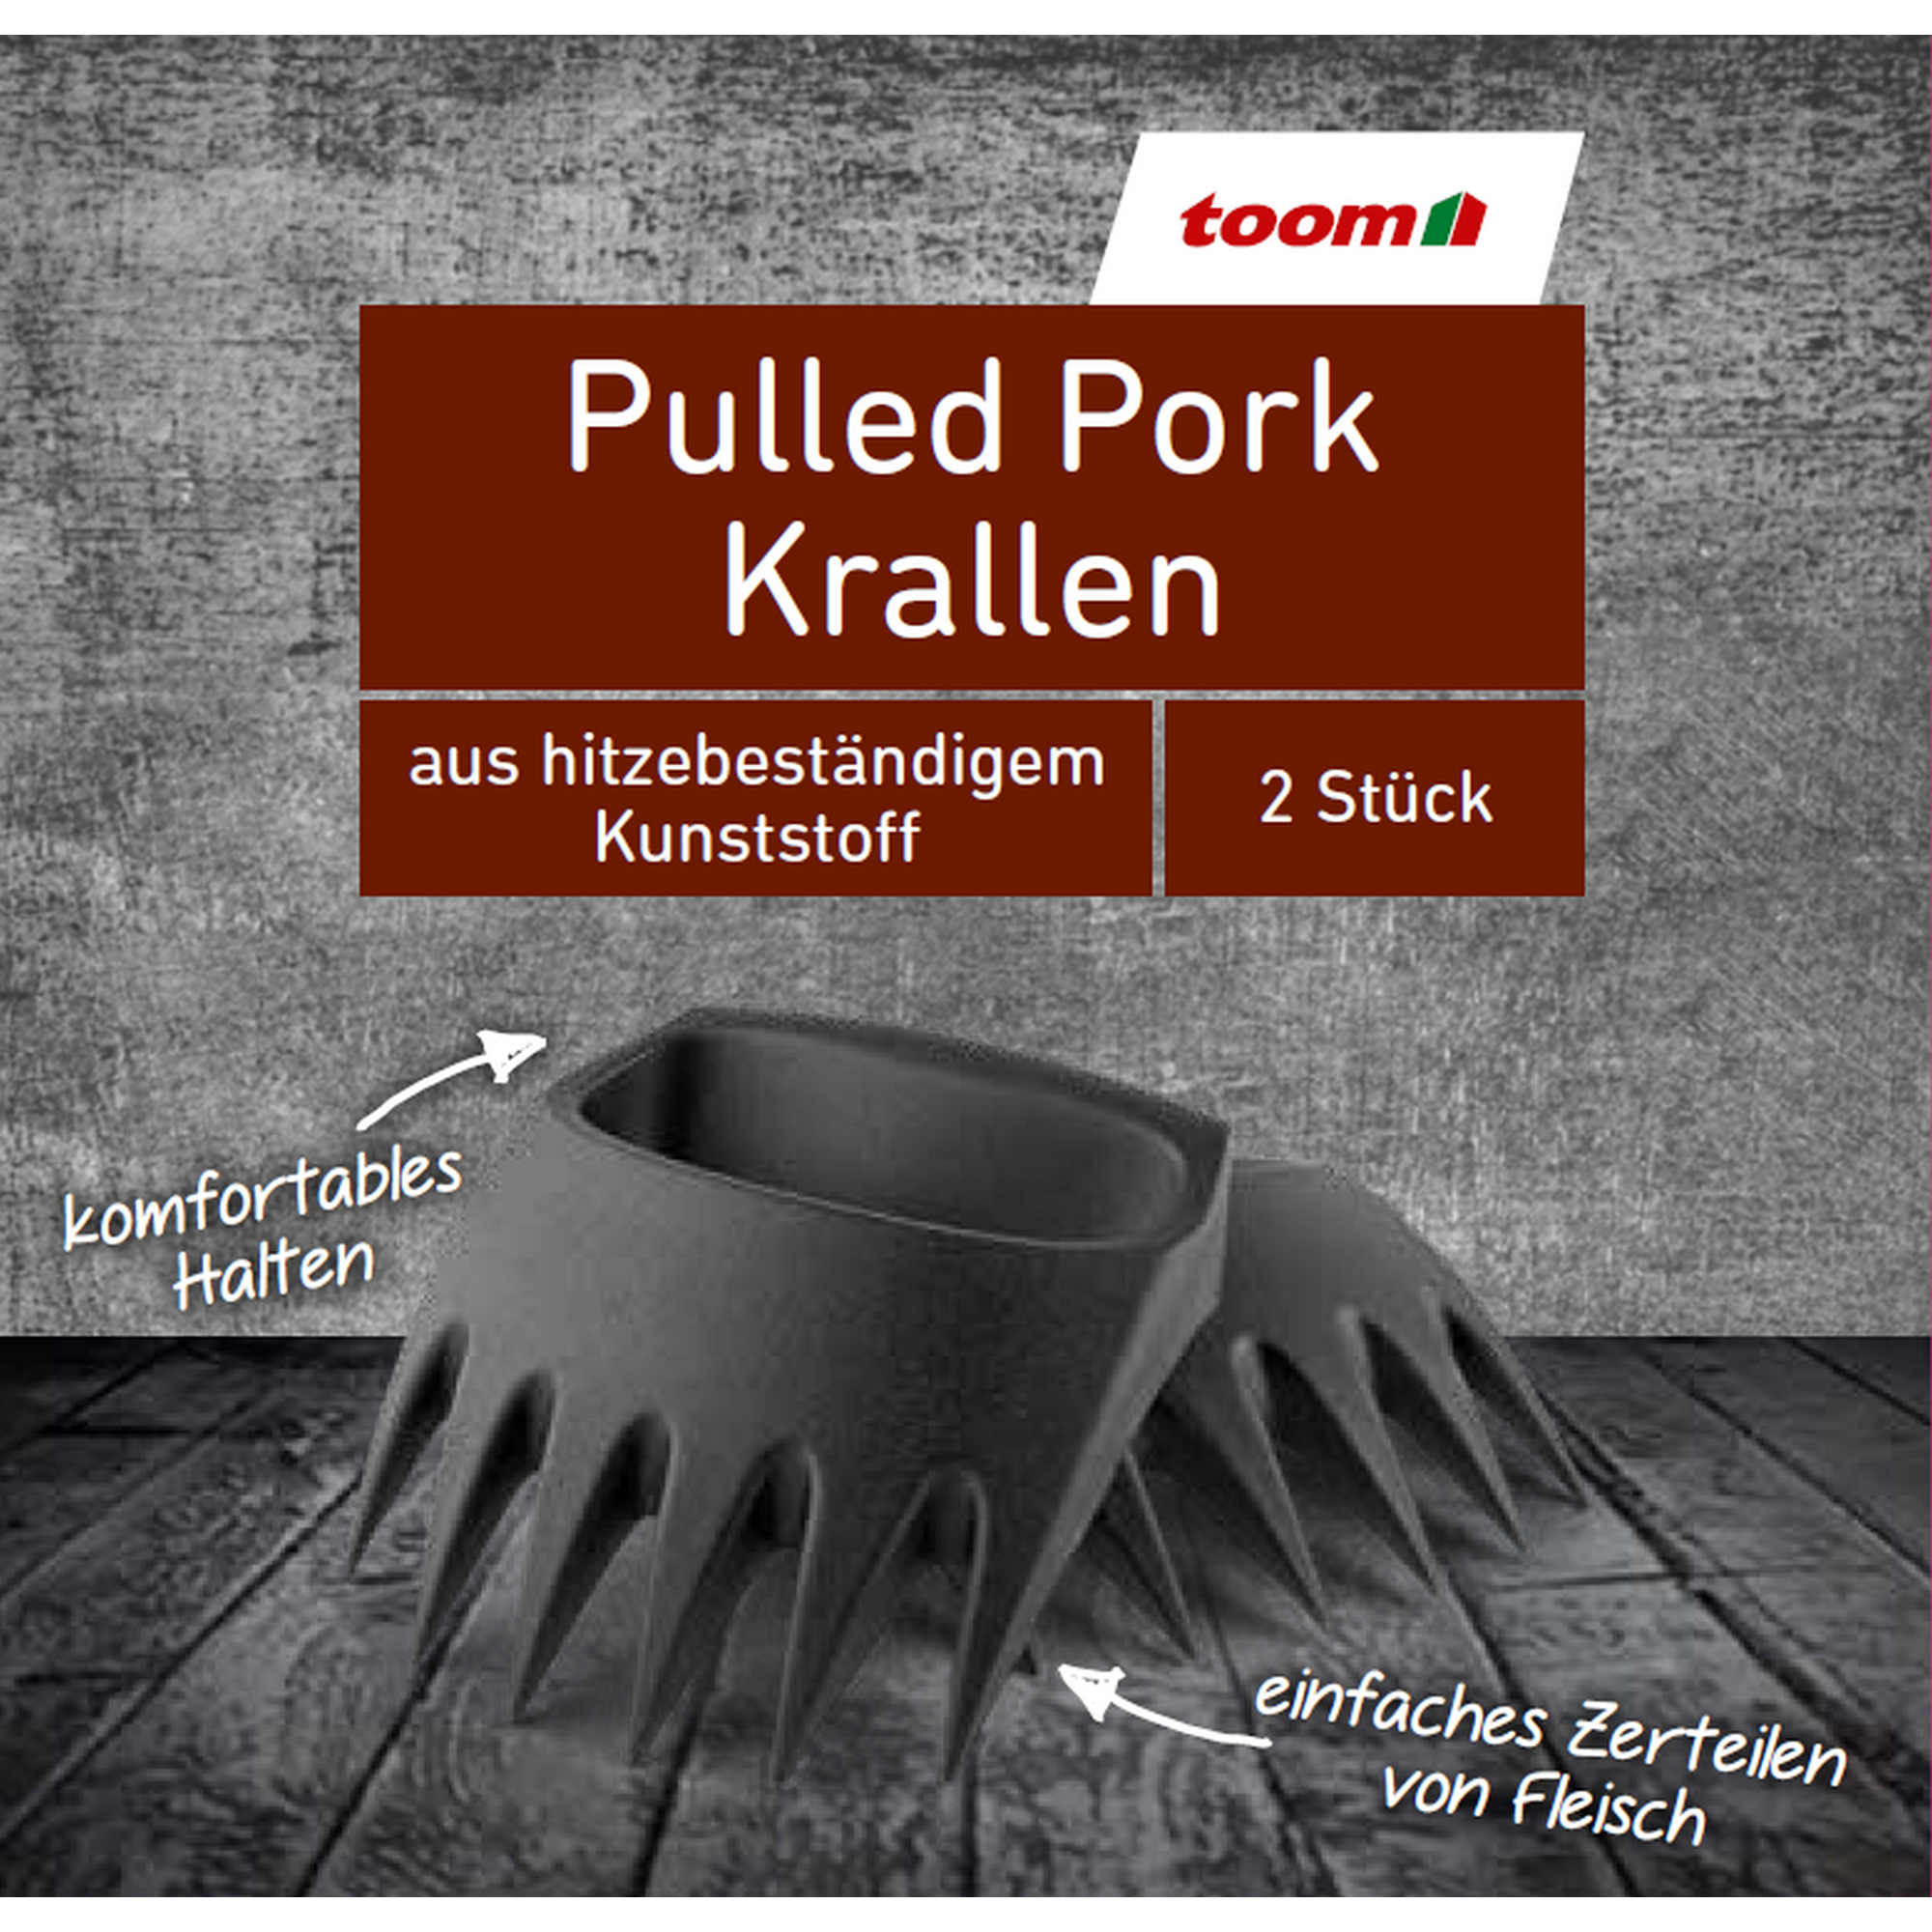 Pulled Pork-Krallen schwarz 13 x 11 cm + product picture